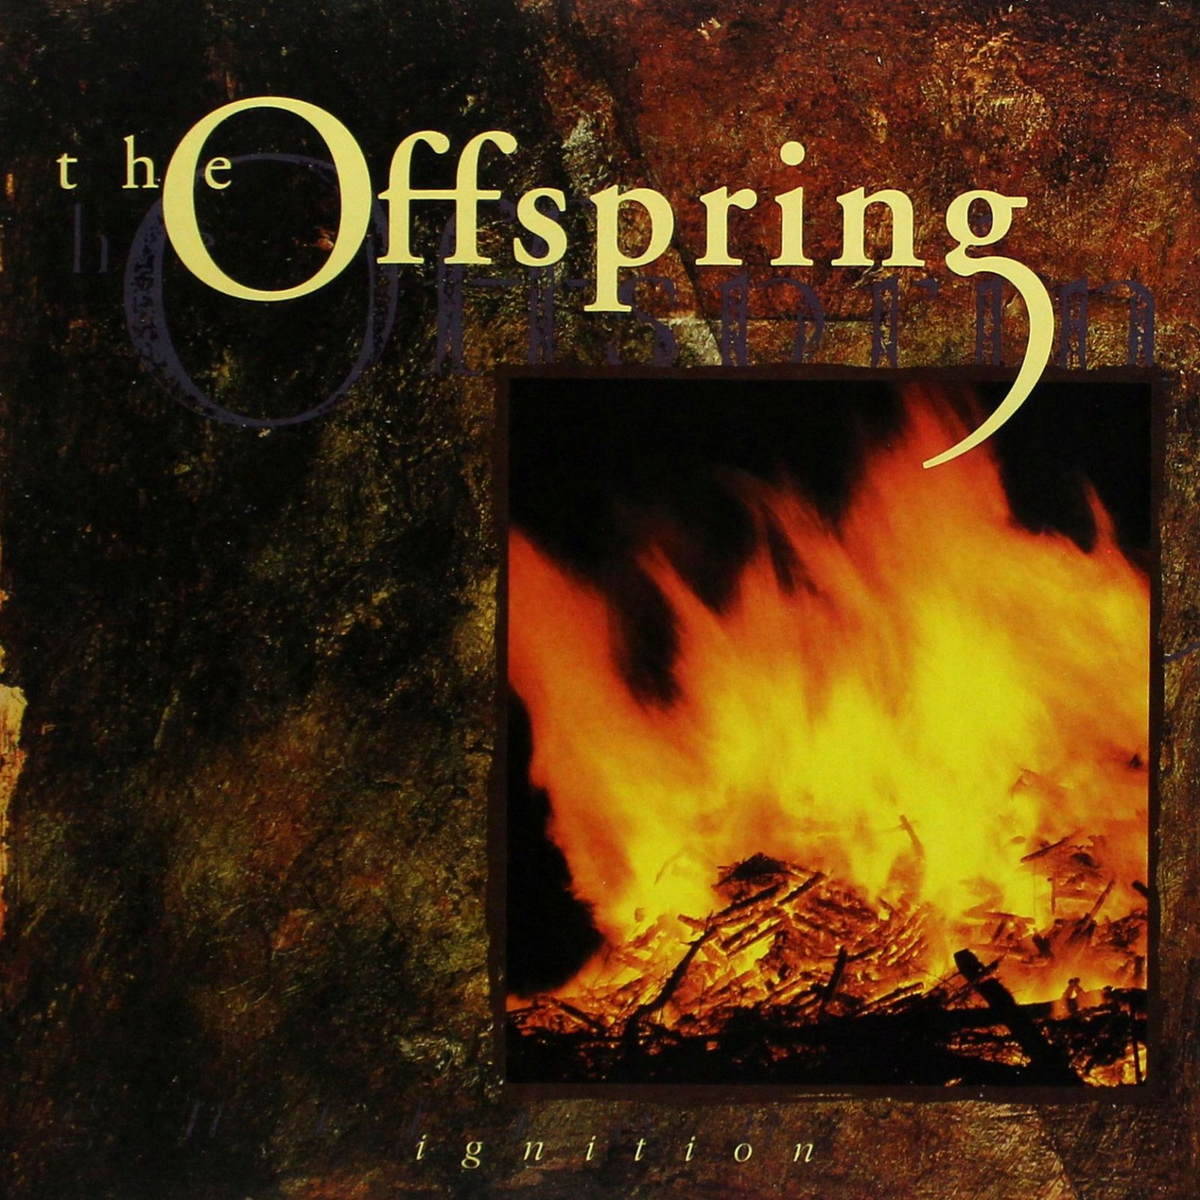 Виниловая пластинка Offspring, The, Ignition (8714092686715) виниловая пластинка offspring the ignition 8714092686715